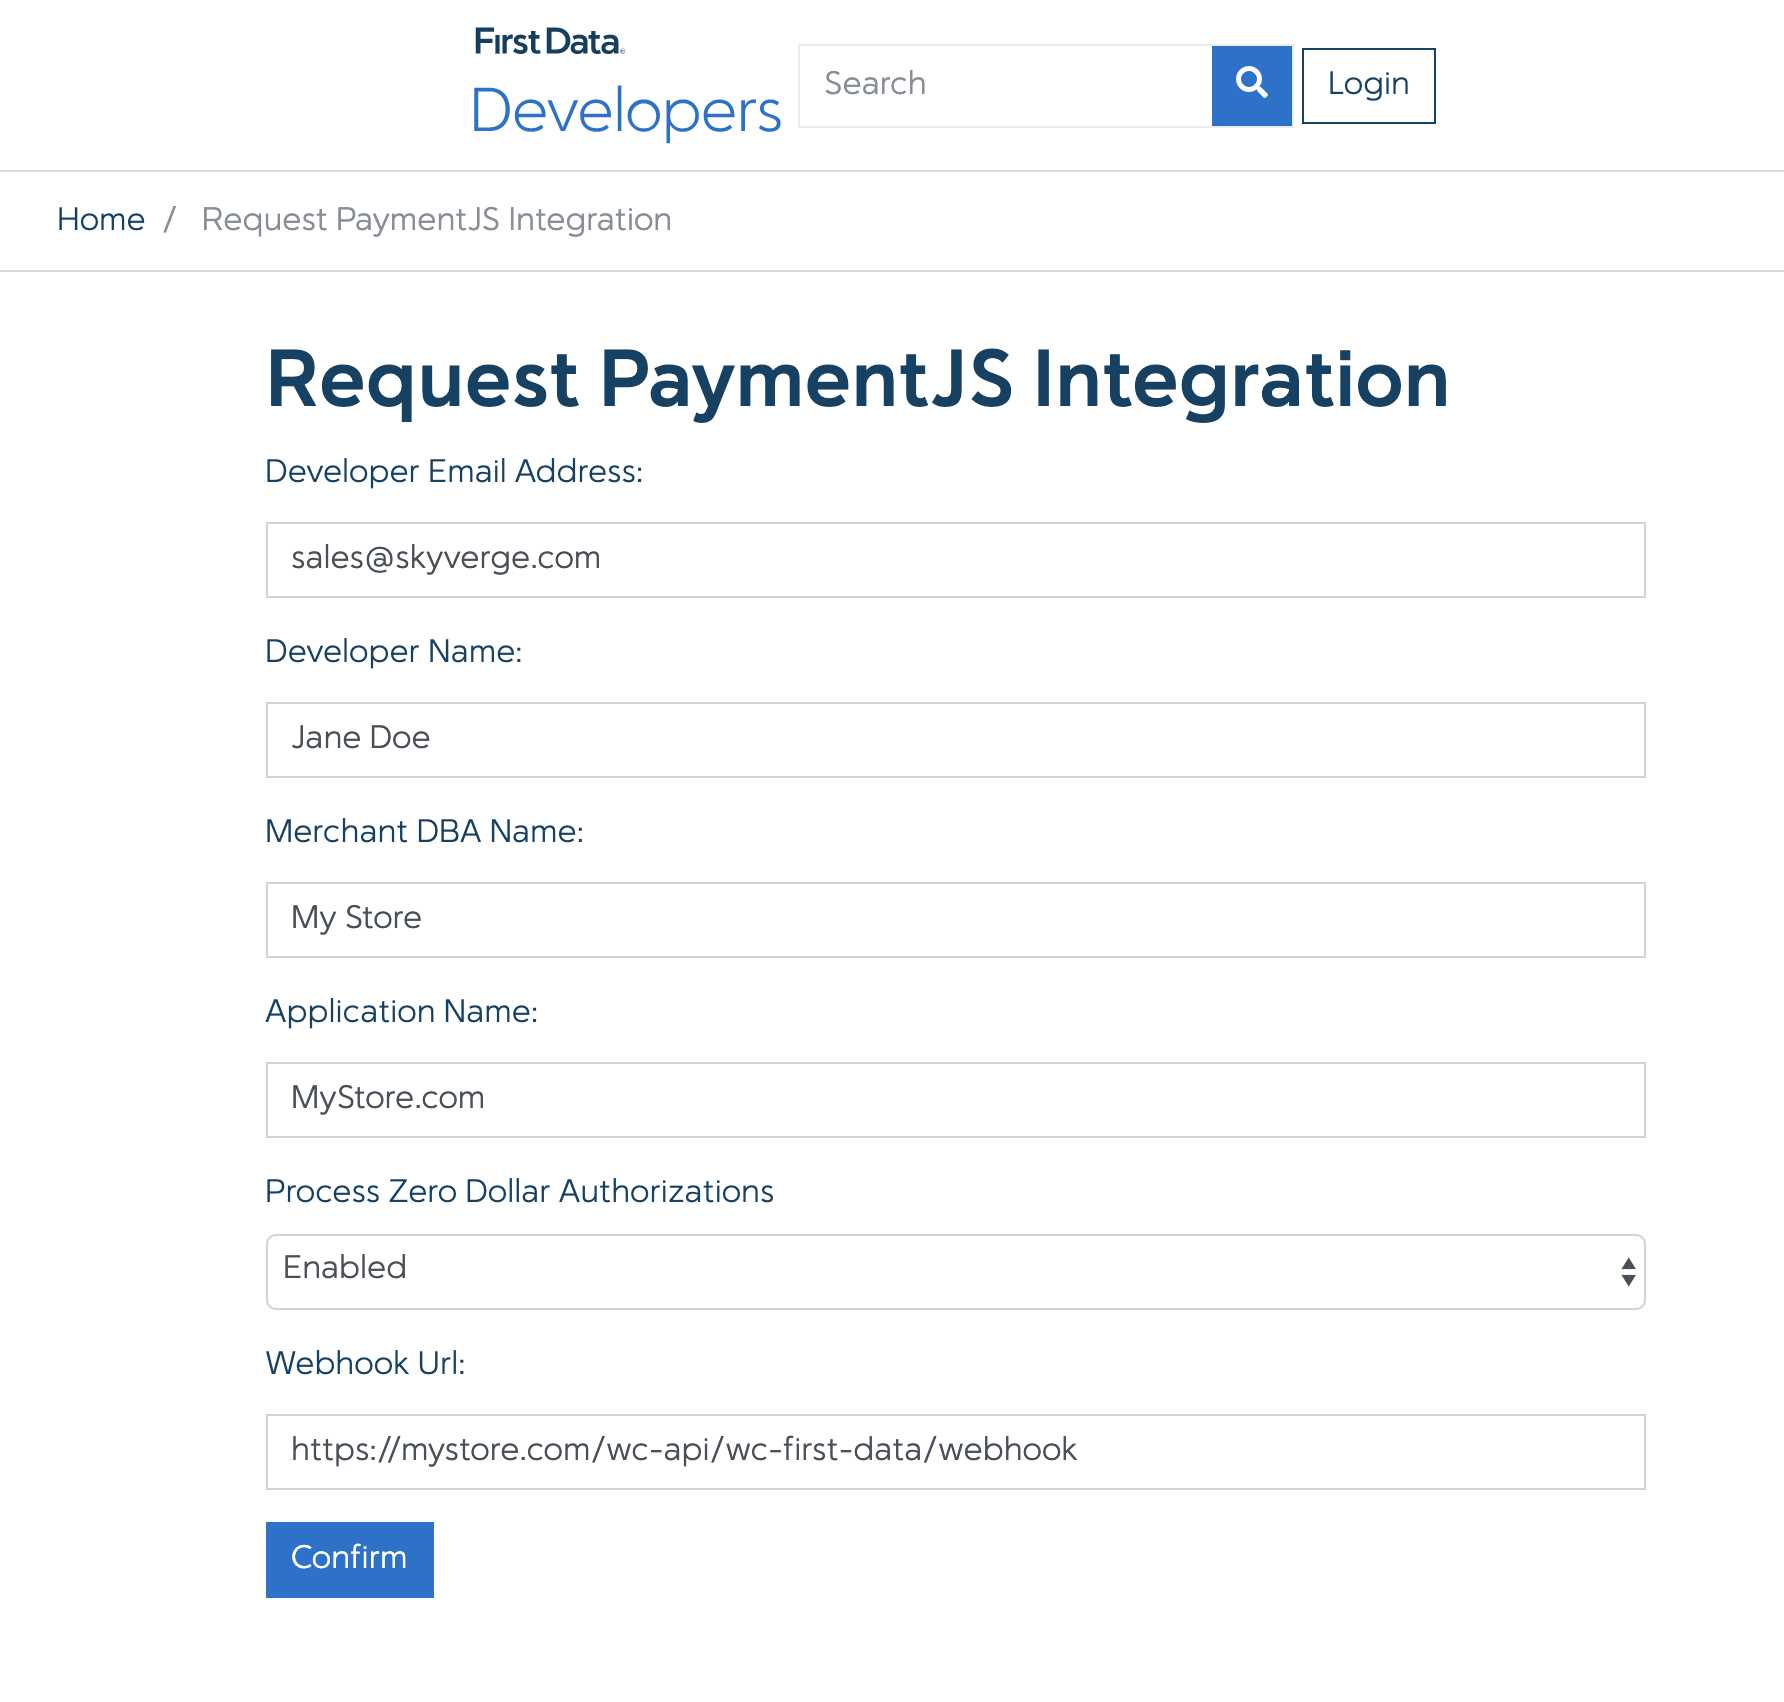 WooCommerce First Data - Request Payment.JS Webhook URL